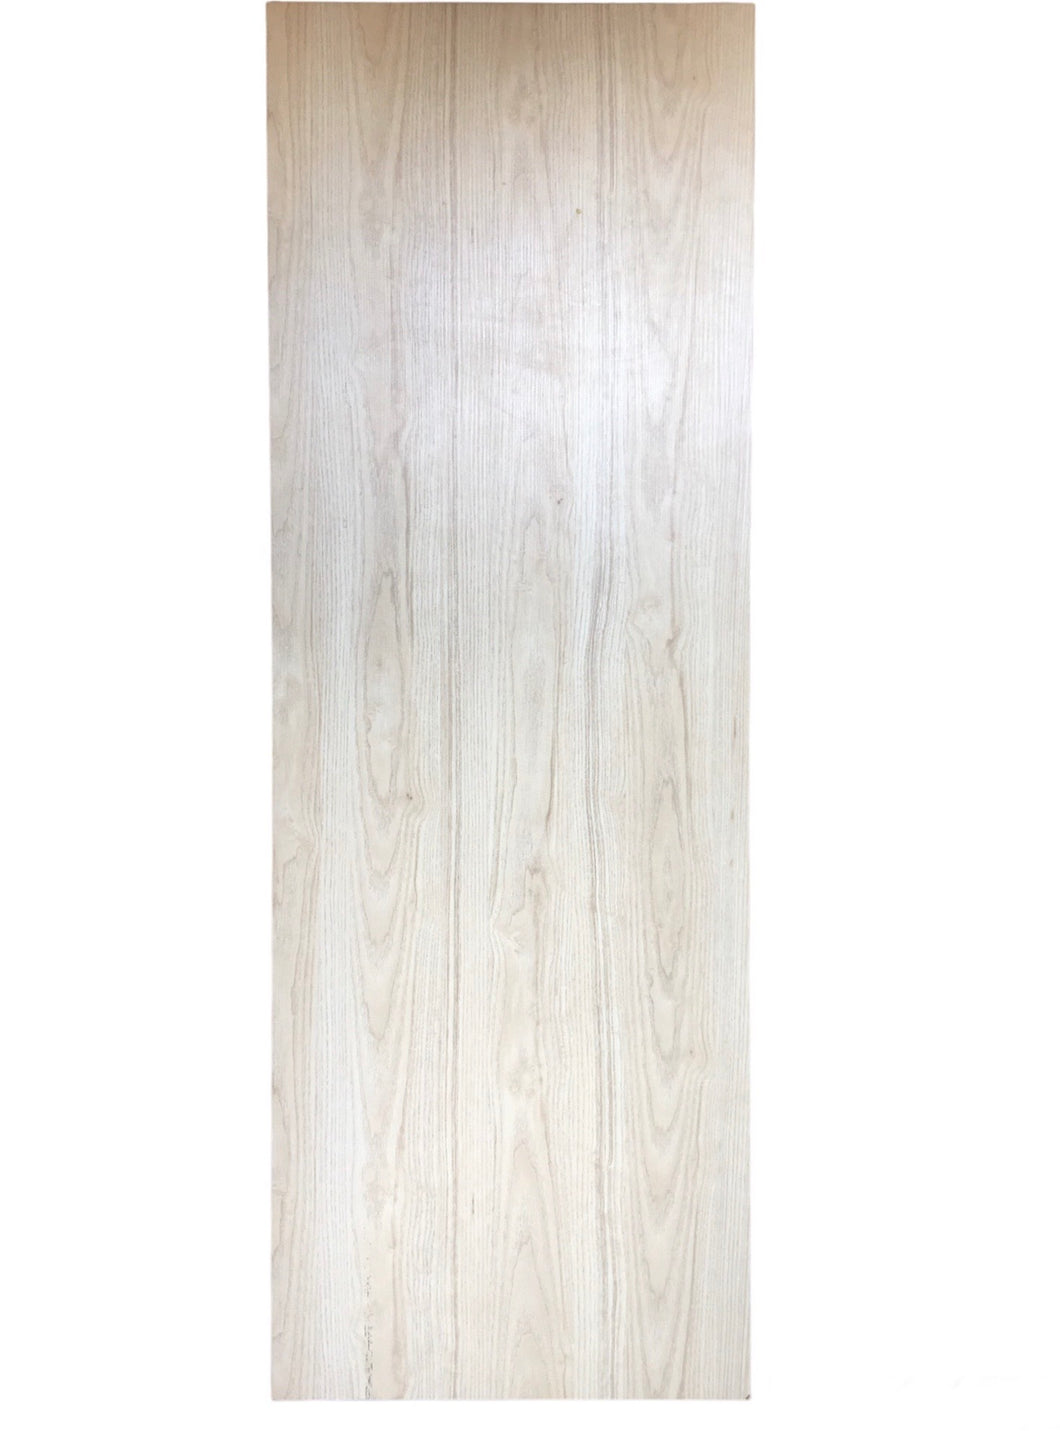 Light Wood Counter Top